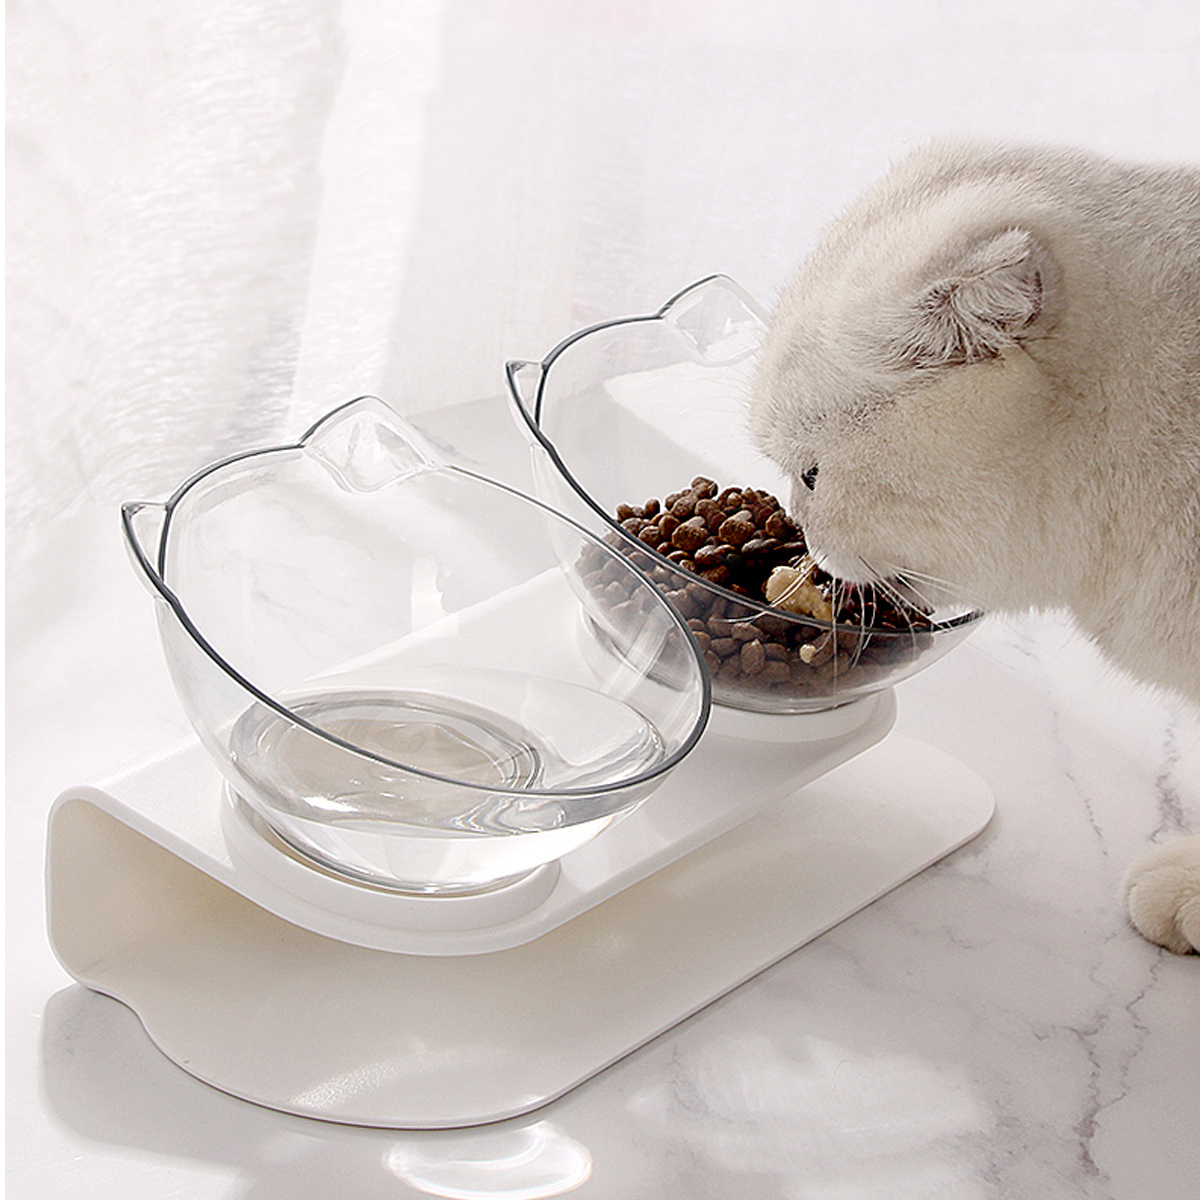 15deg-Tilt-Angle-Cat-Food-Bowl-Raised-Transparent-Protect-Cats-Spine-Anti-Vomiting-Cat-Dish-Removabl-1881162-9